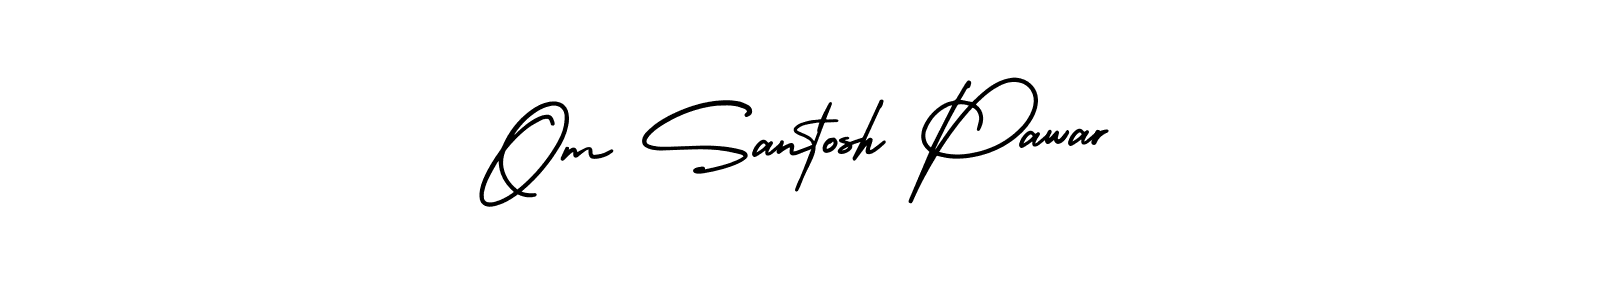 How to Draw Om Santosh Pawar signature style? AmerikaSignatureDemo-Regular is a latest design signature styles for name Om Santosh Pawar. Om Santosh Pawar signature style 3 images and pictures png